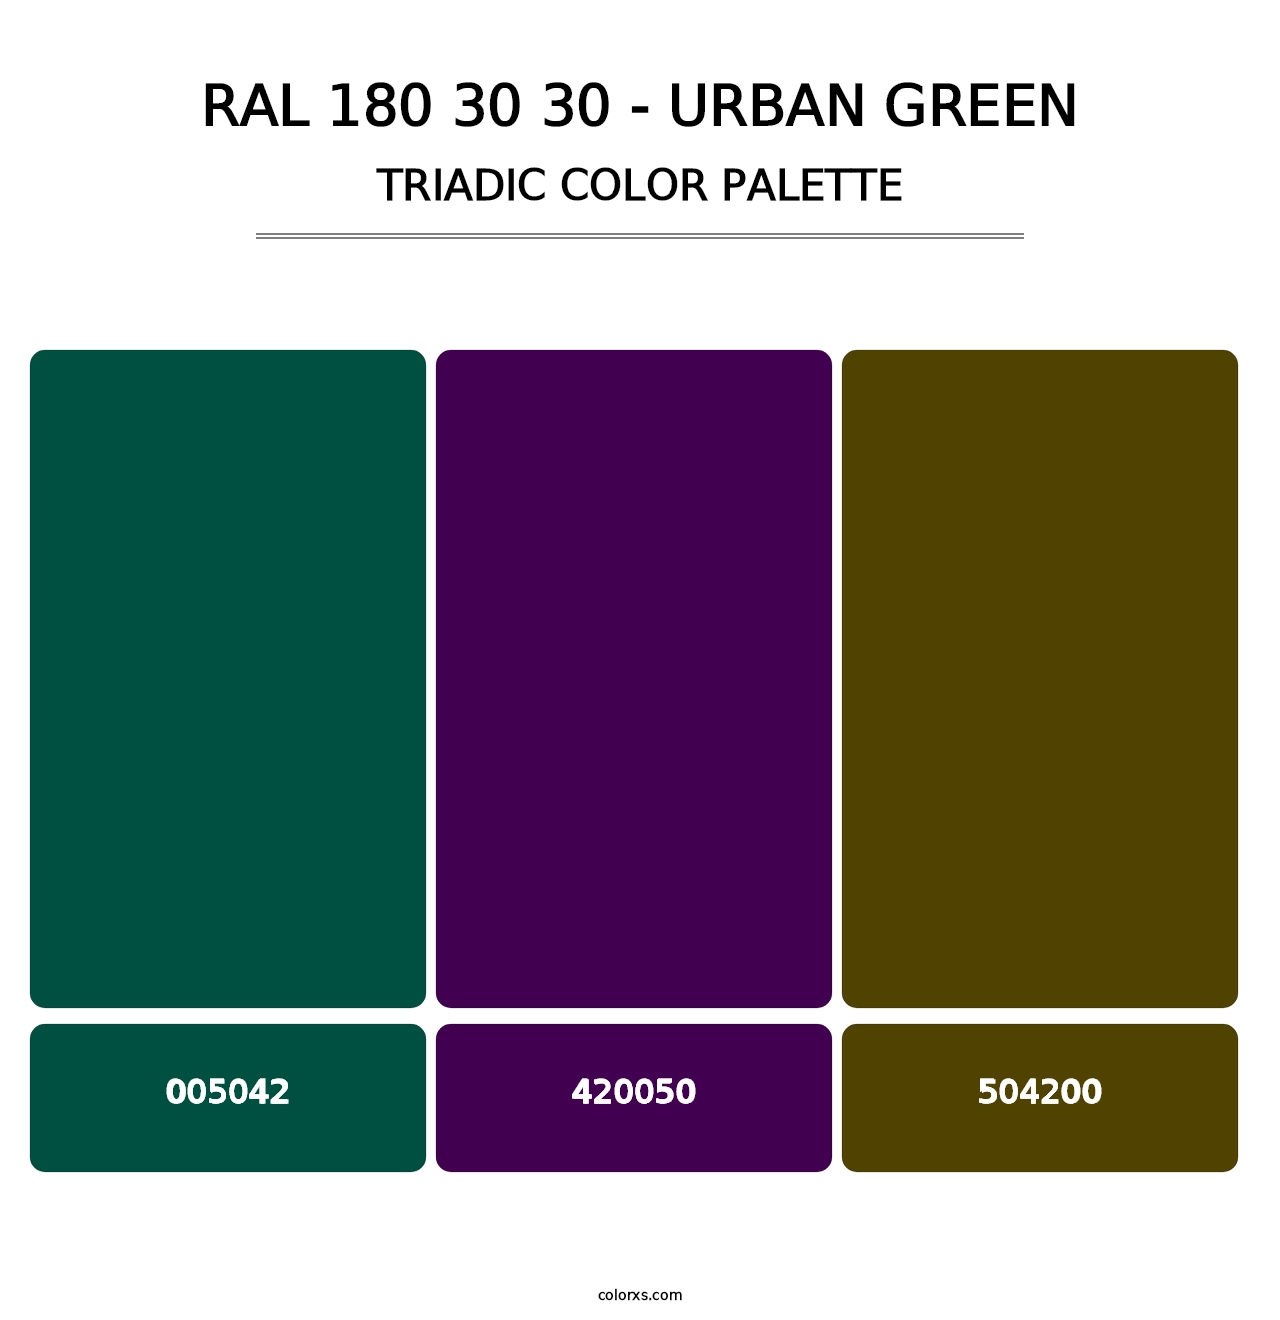 RAL 180 30 30 - Urban Green - Triadic Color Palette